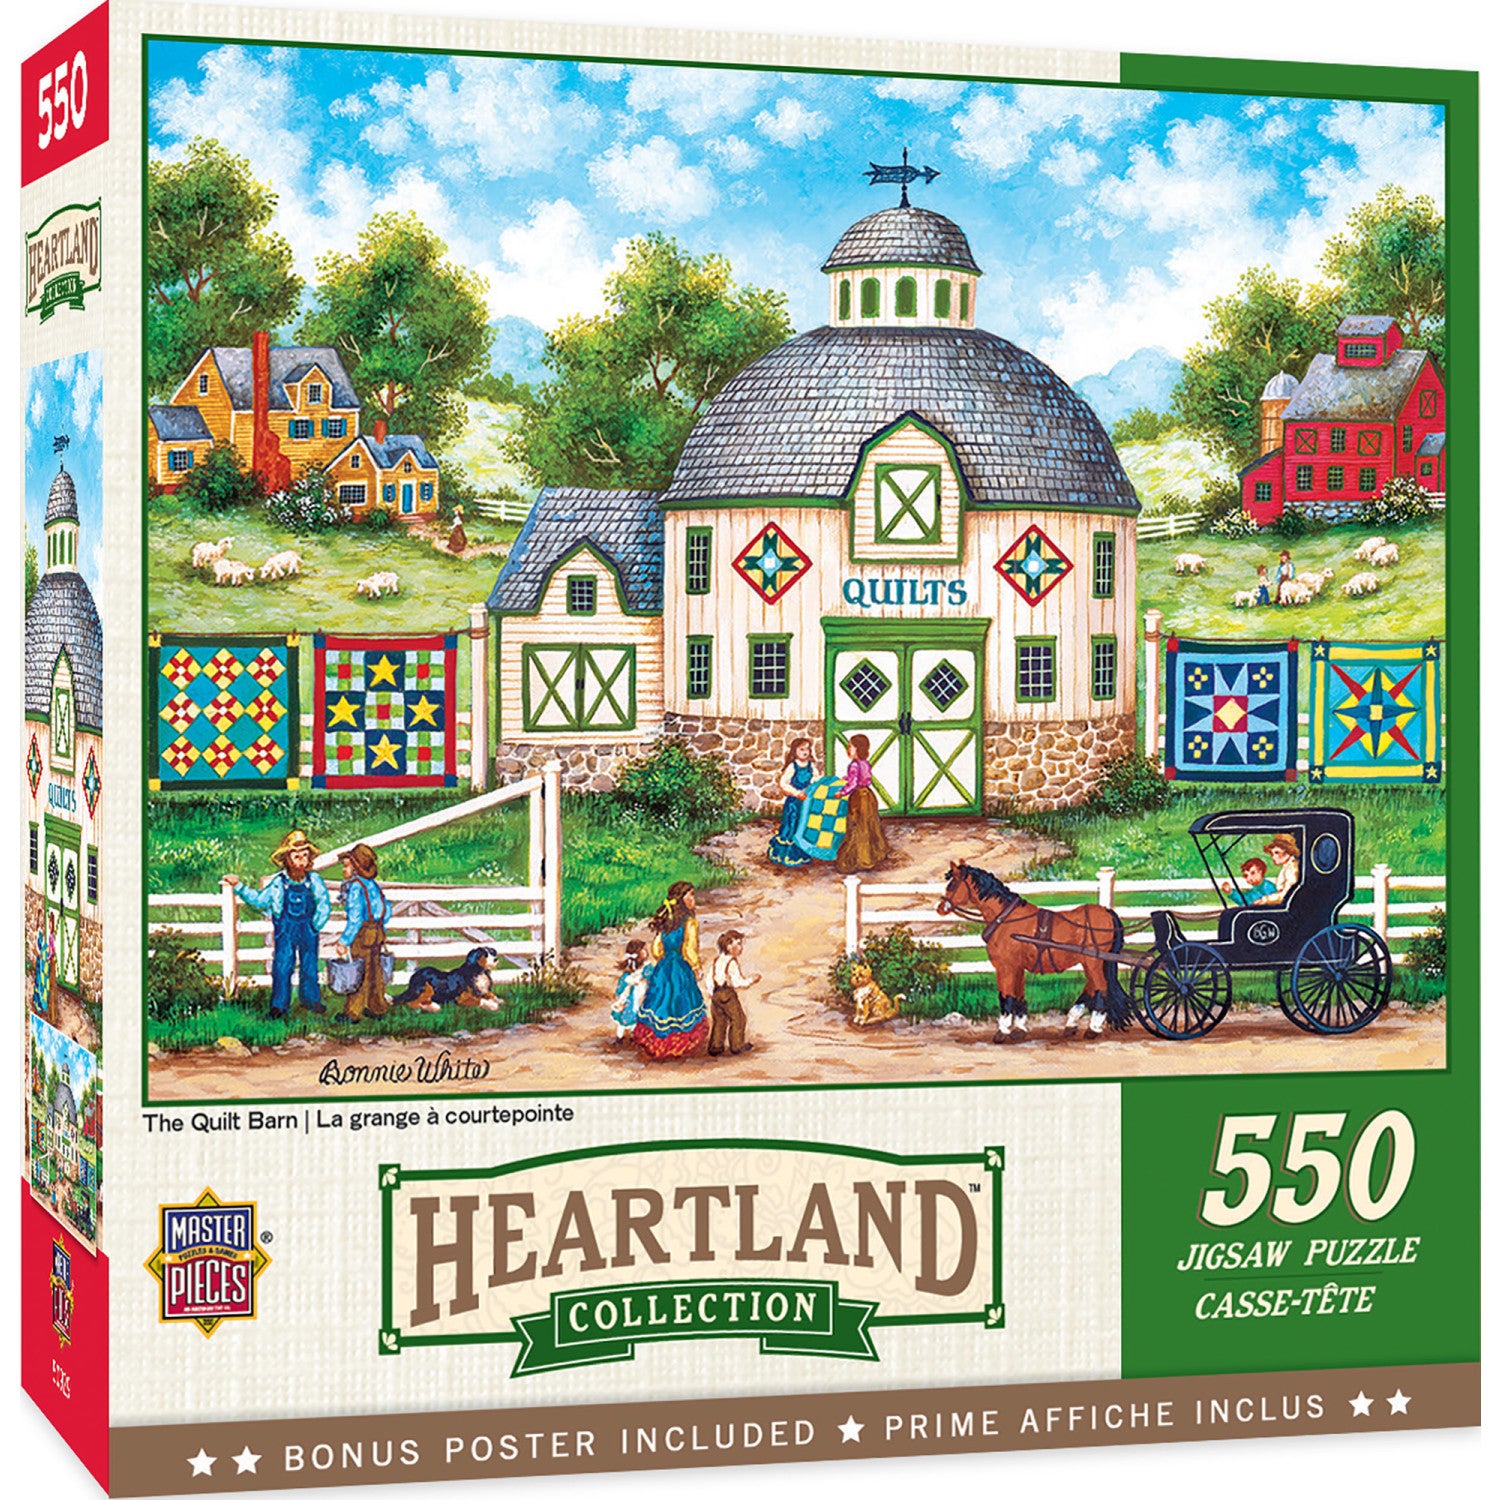 Heartland - The Quilt Barn 550 Piece Jigsaw Puzzle